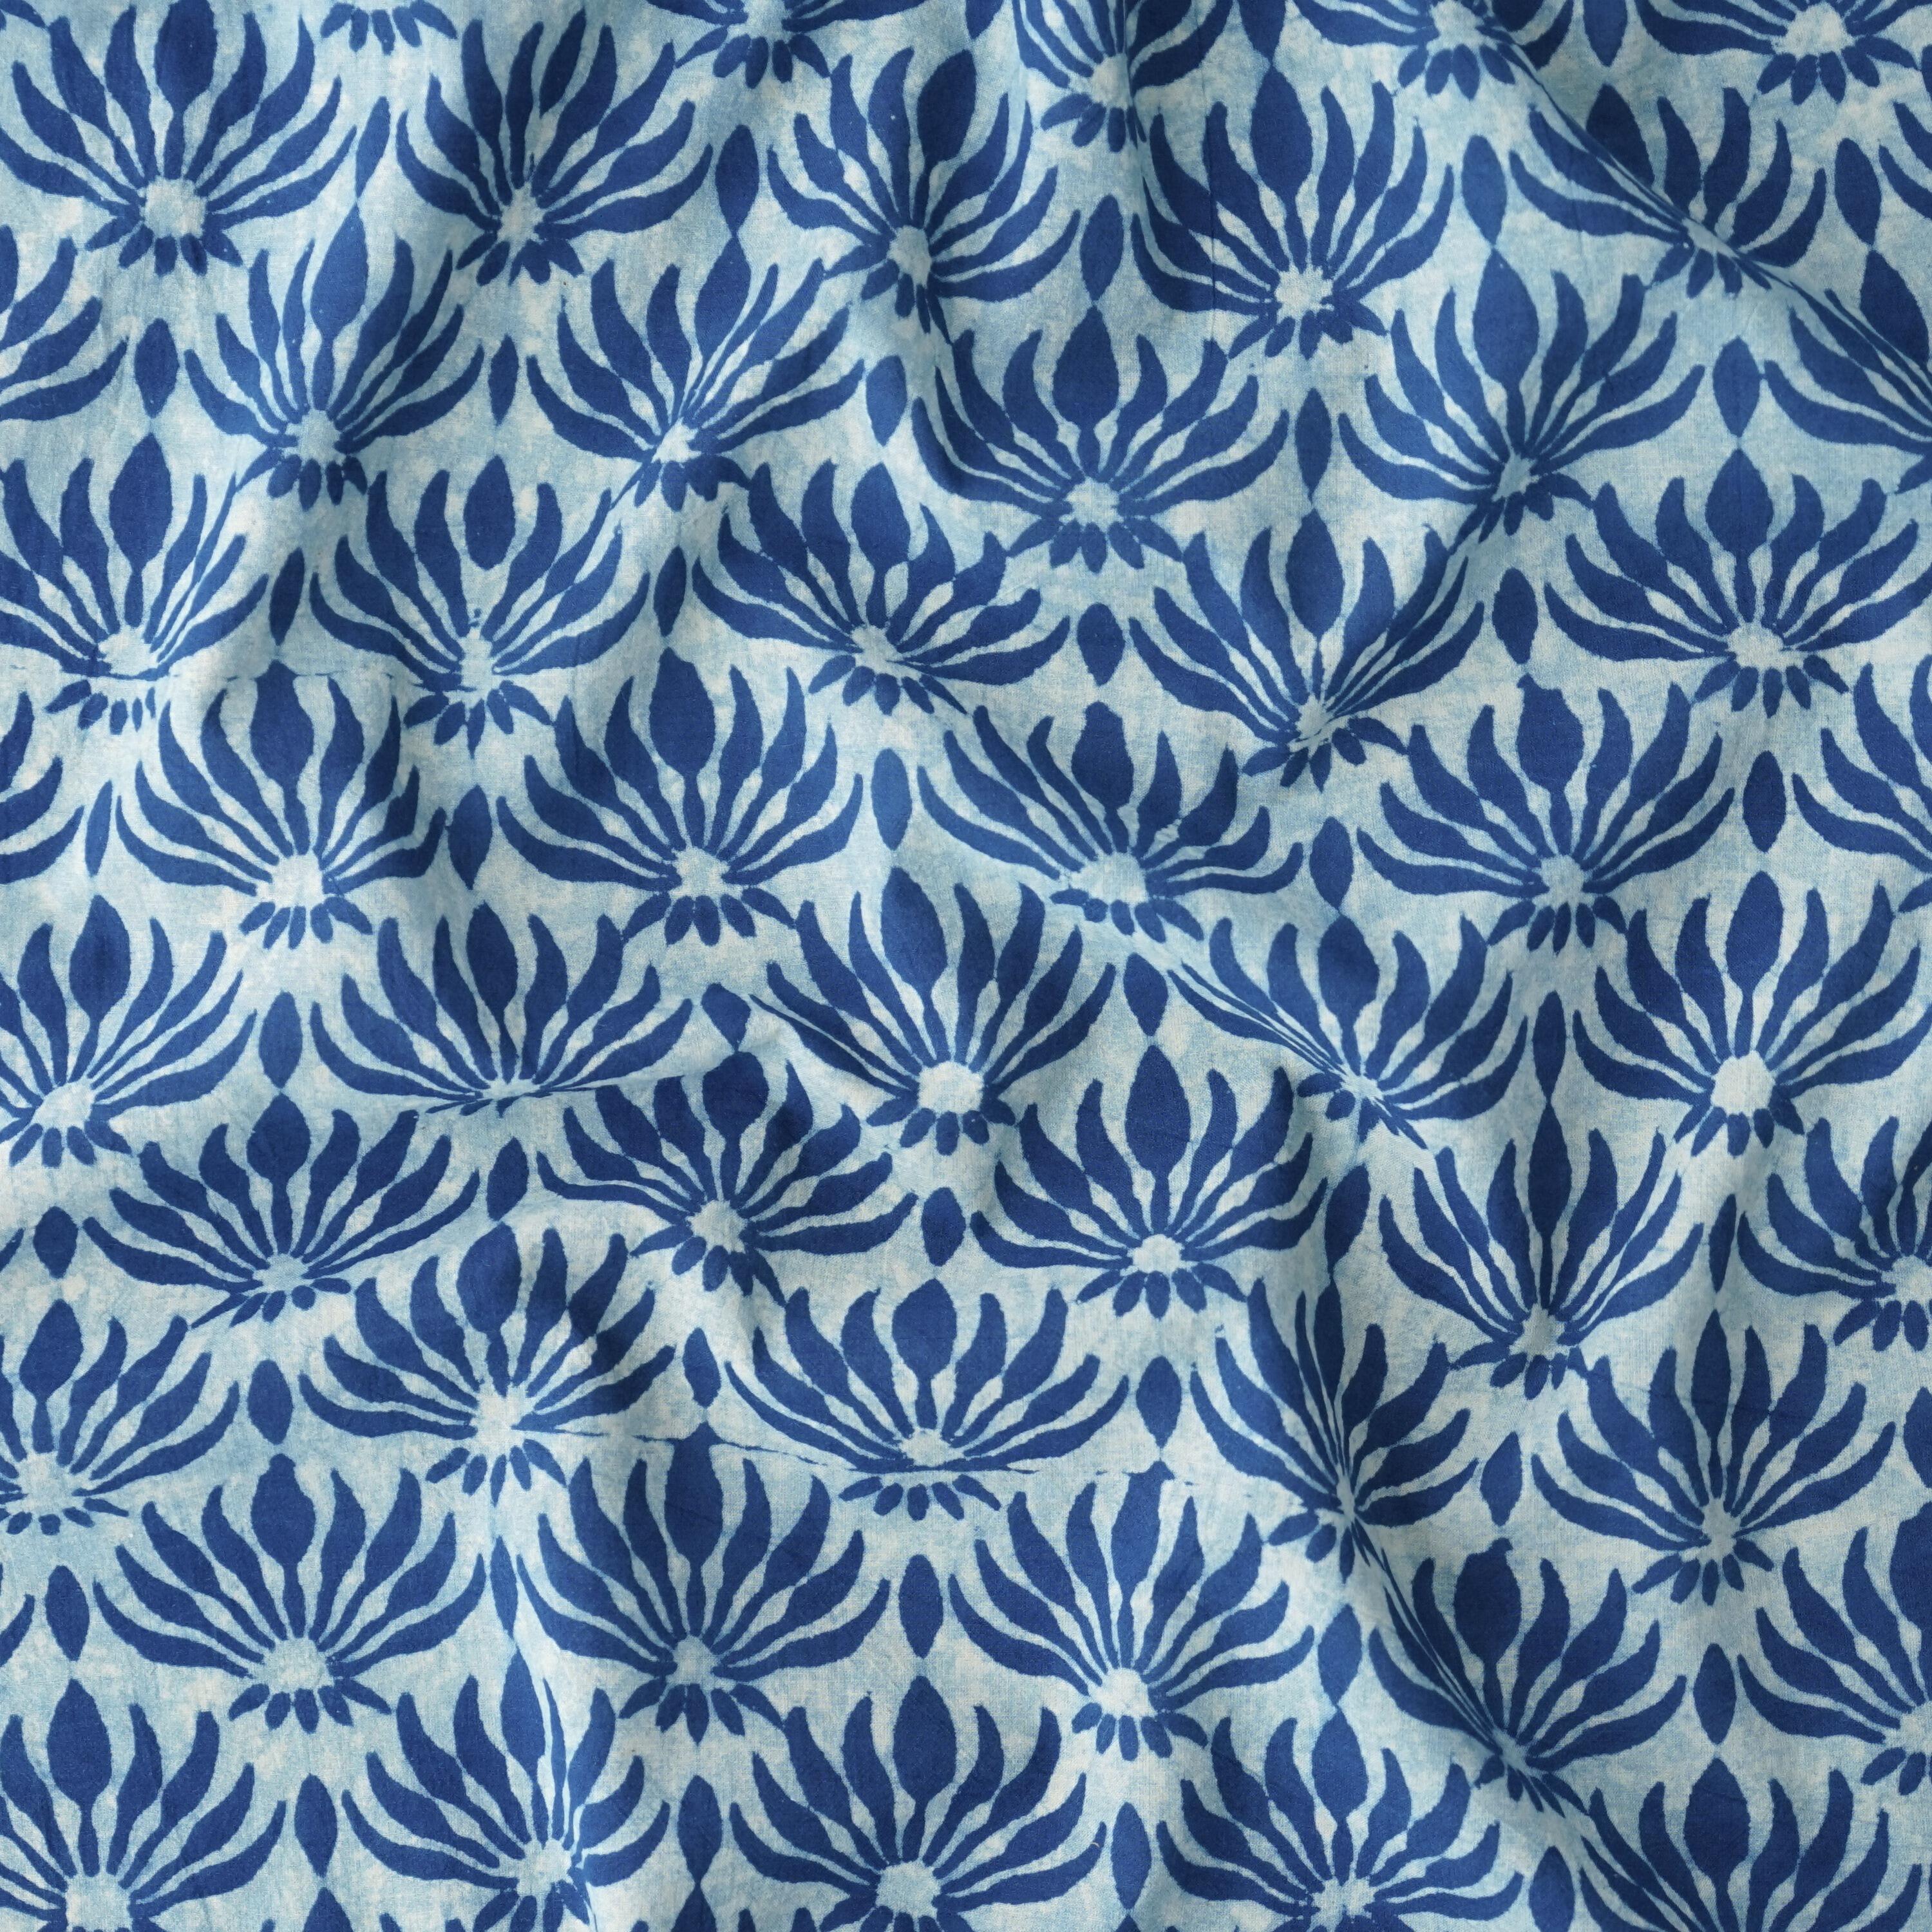 100% Block-Printed Cotton Fabric from India - Ajrak - Indigo White Lotus Flower Print - Contrast